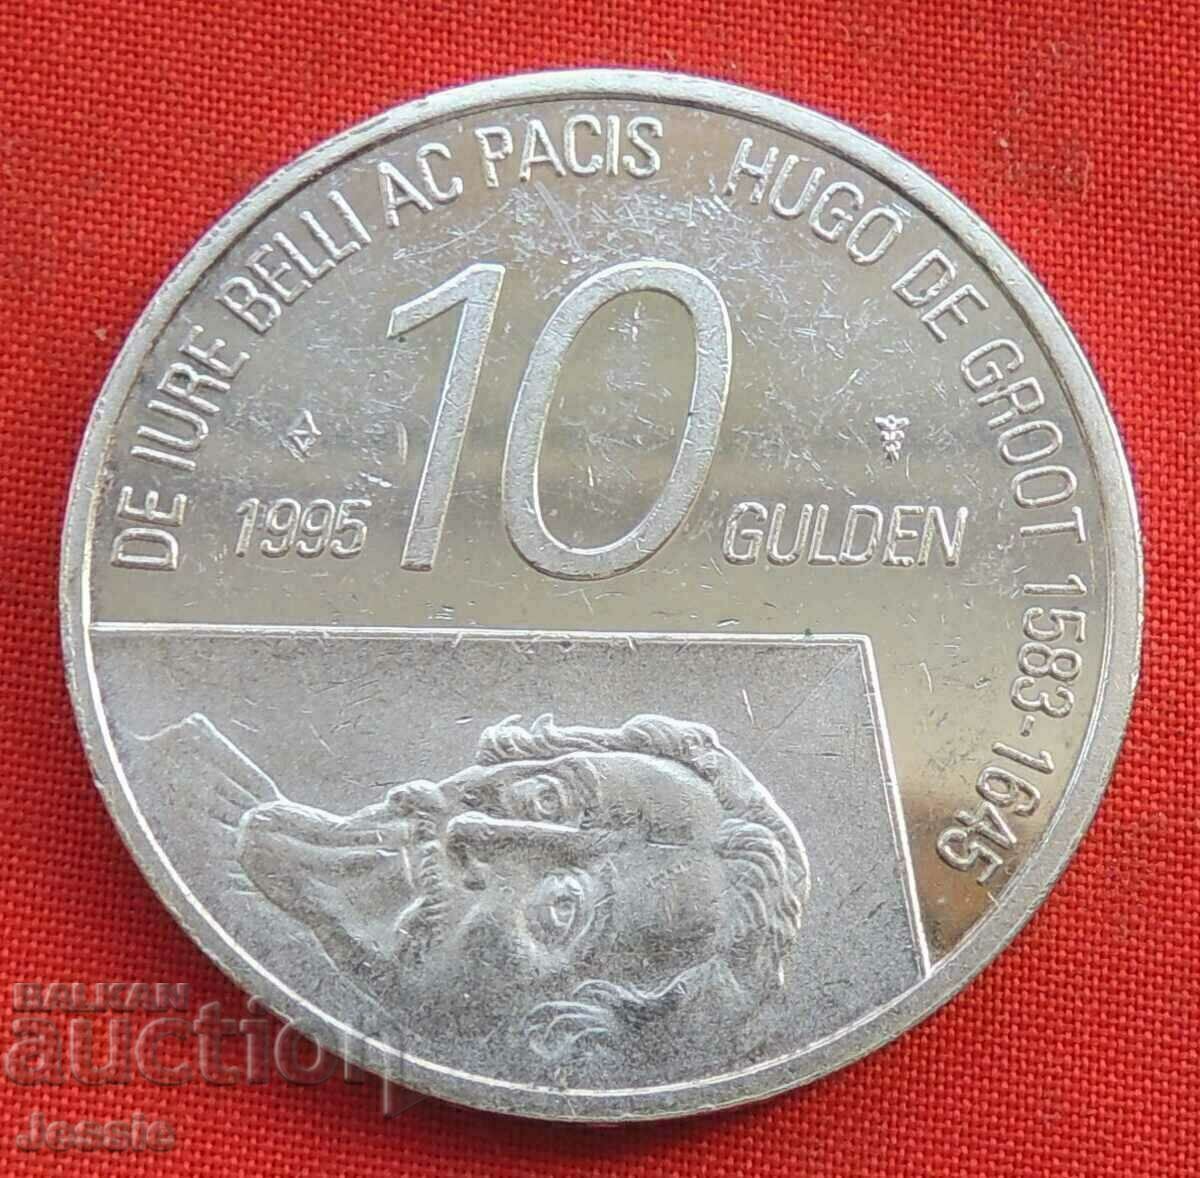 10 guilders 1995 Netherlands silver